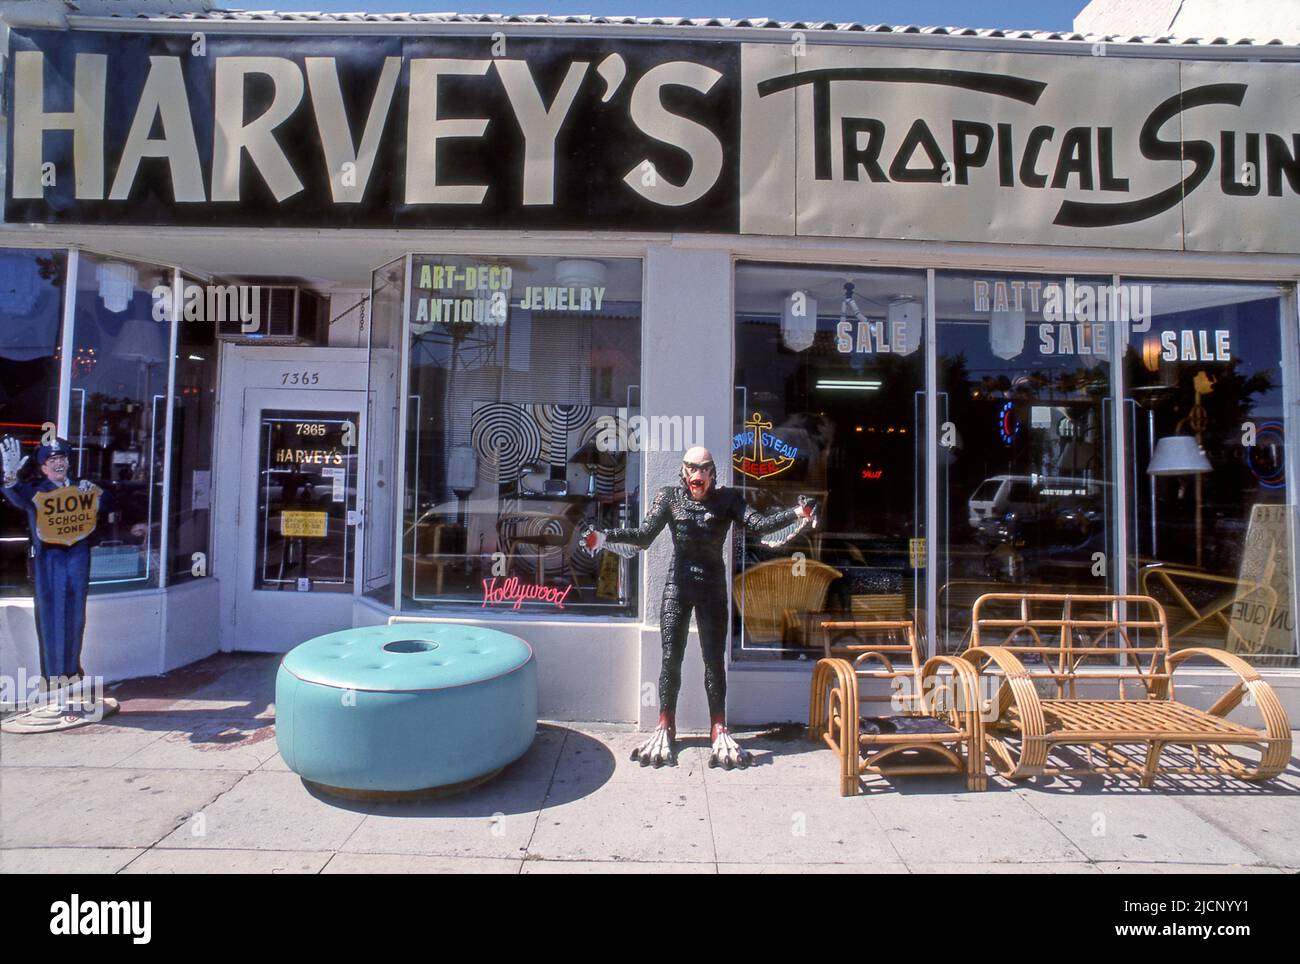 Harvey's Tropical Sun, Shopping, Melrose Ave., Los Angeles, CA Stock Photo